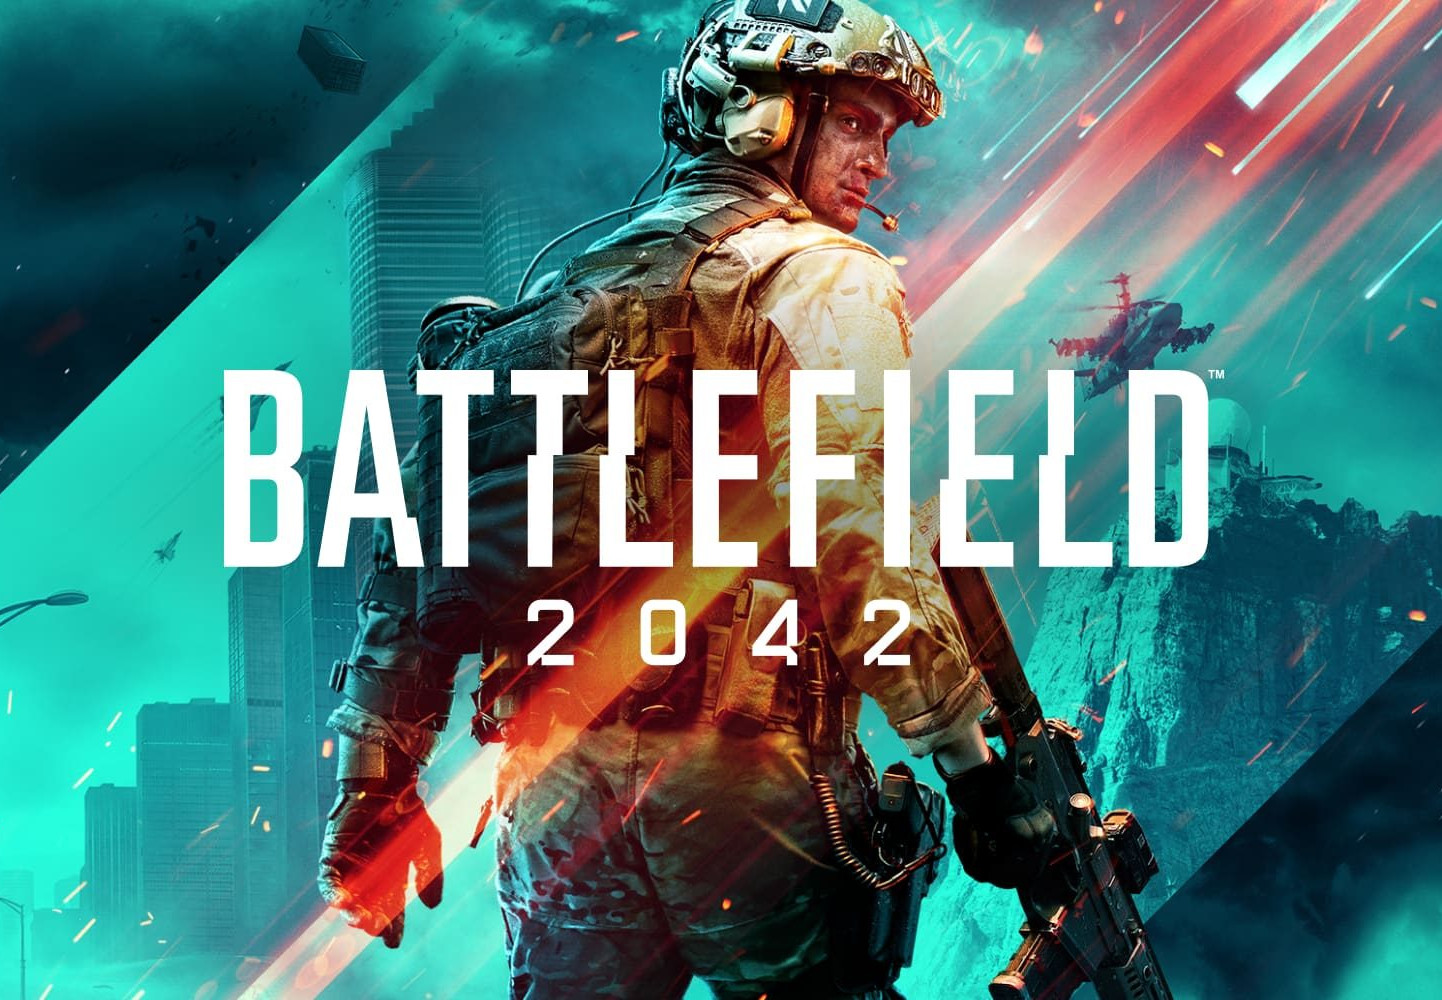 Battlefield 2042 PlayStation 4 Account Pixelpuffin.net Activation Link